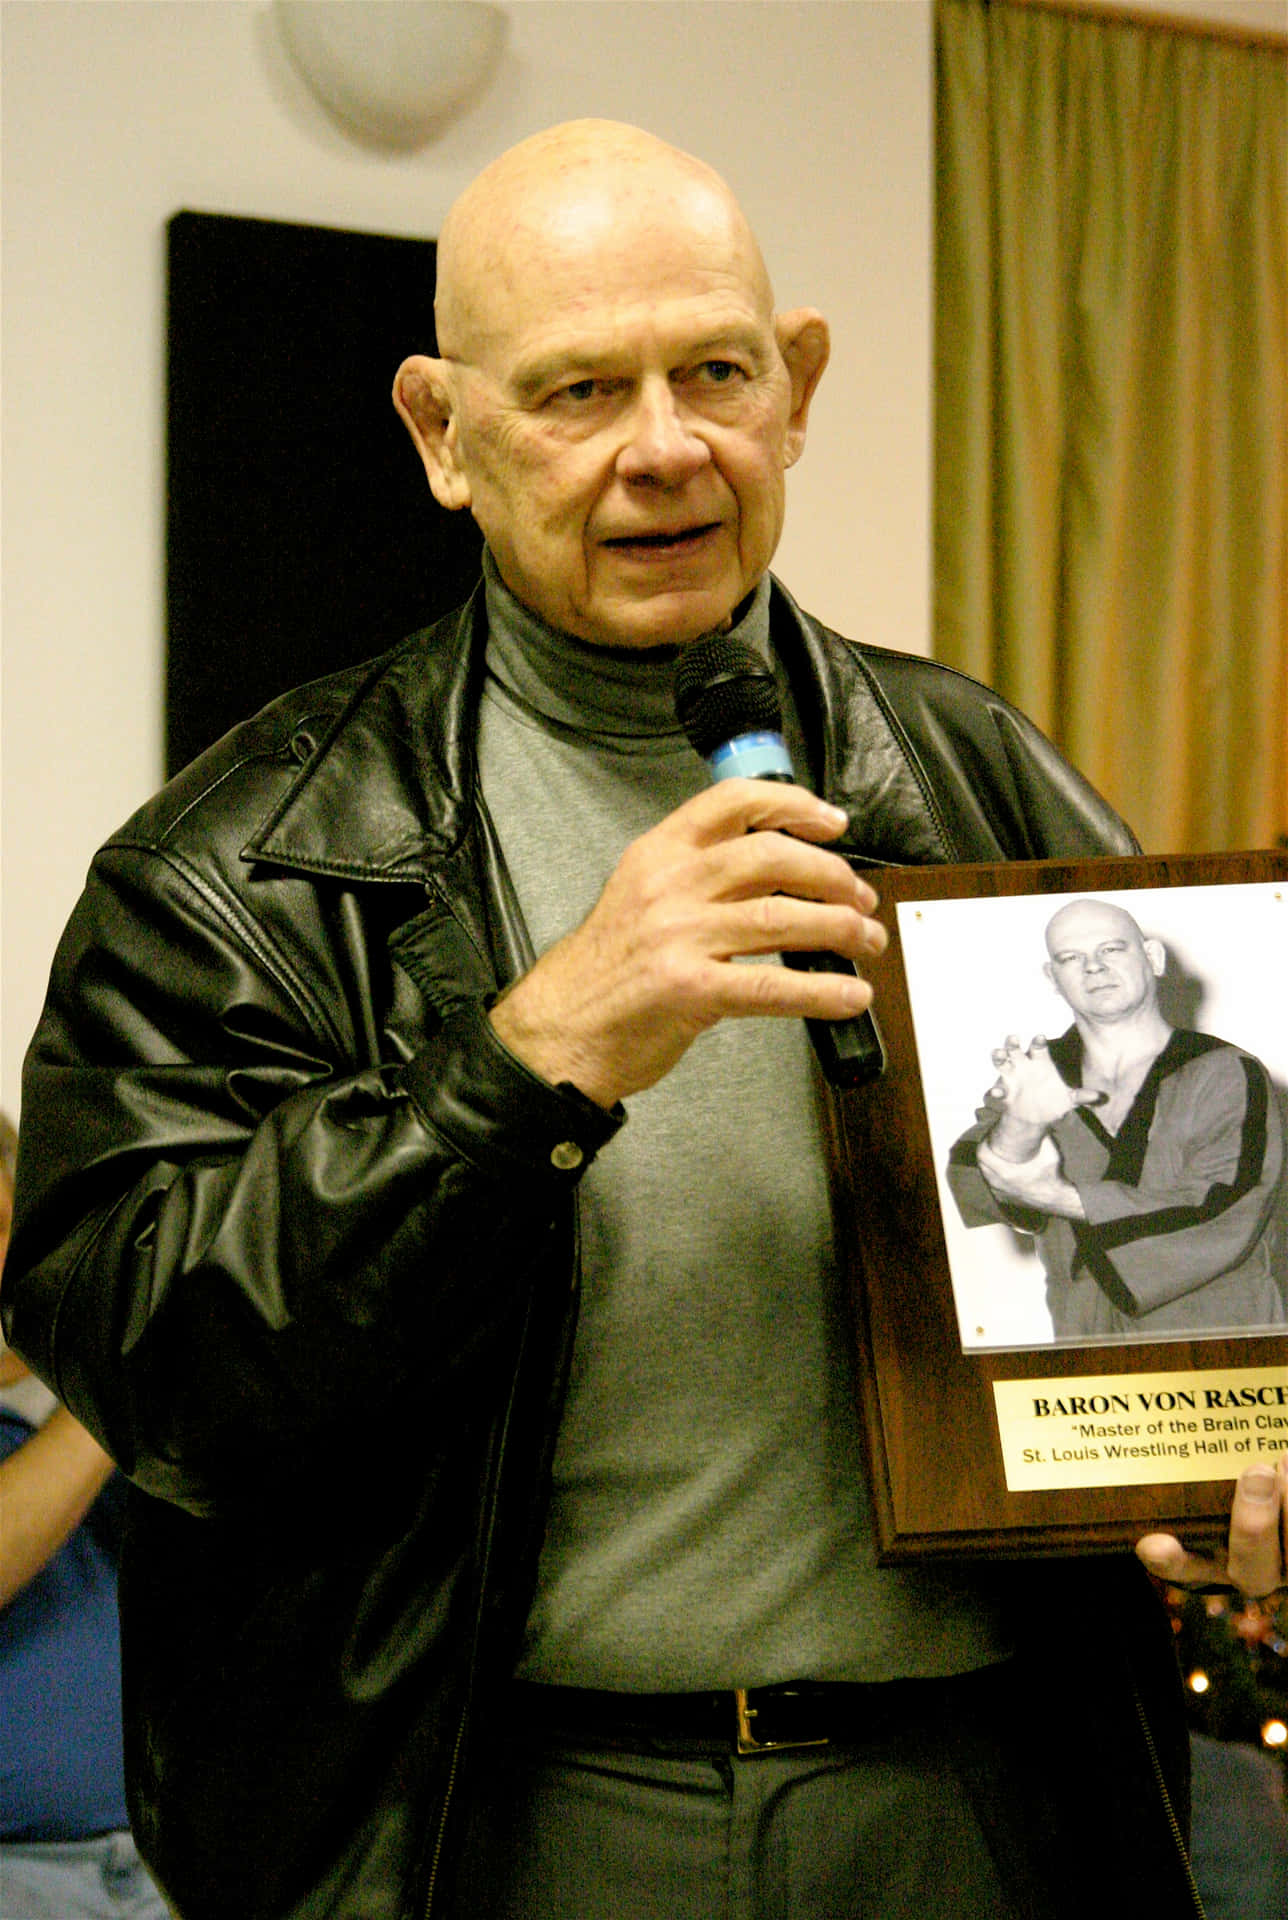 American Retired Wrestler Baron Von Raschke Holding His Memorabilia Portrait Wallpaper